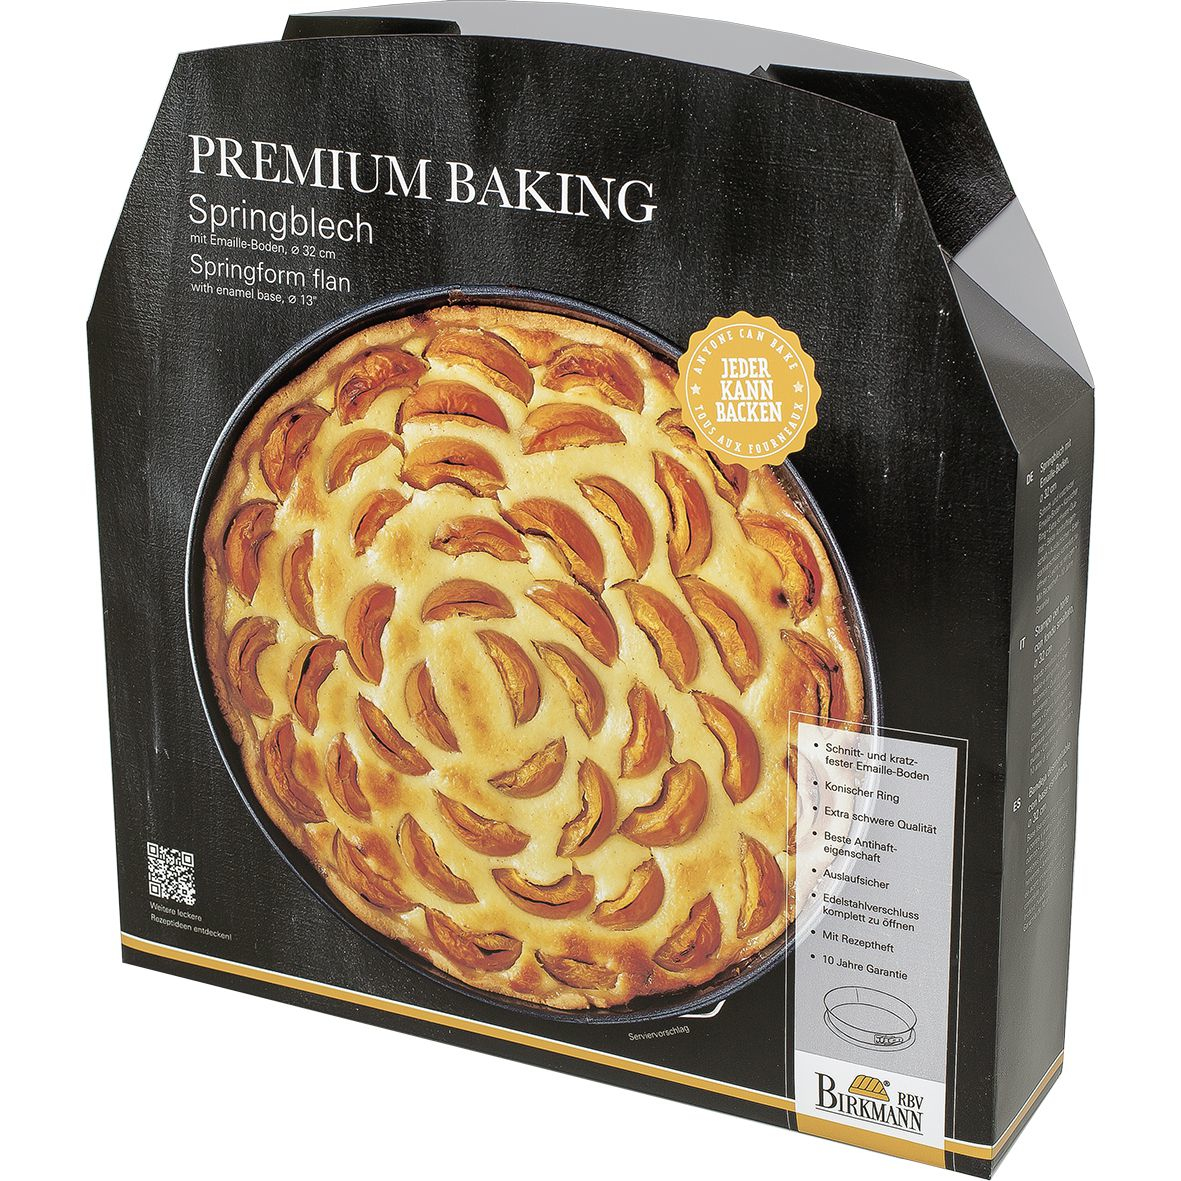 RBV Birkmann 882096 Premium Baking springform pan 32er